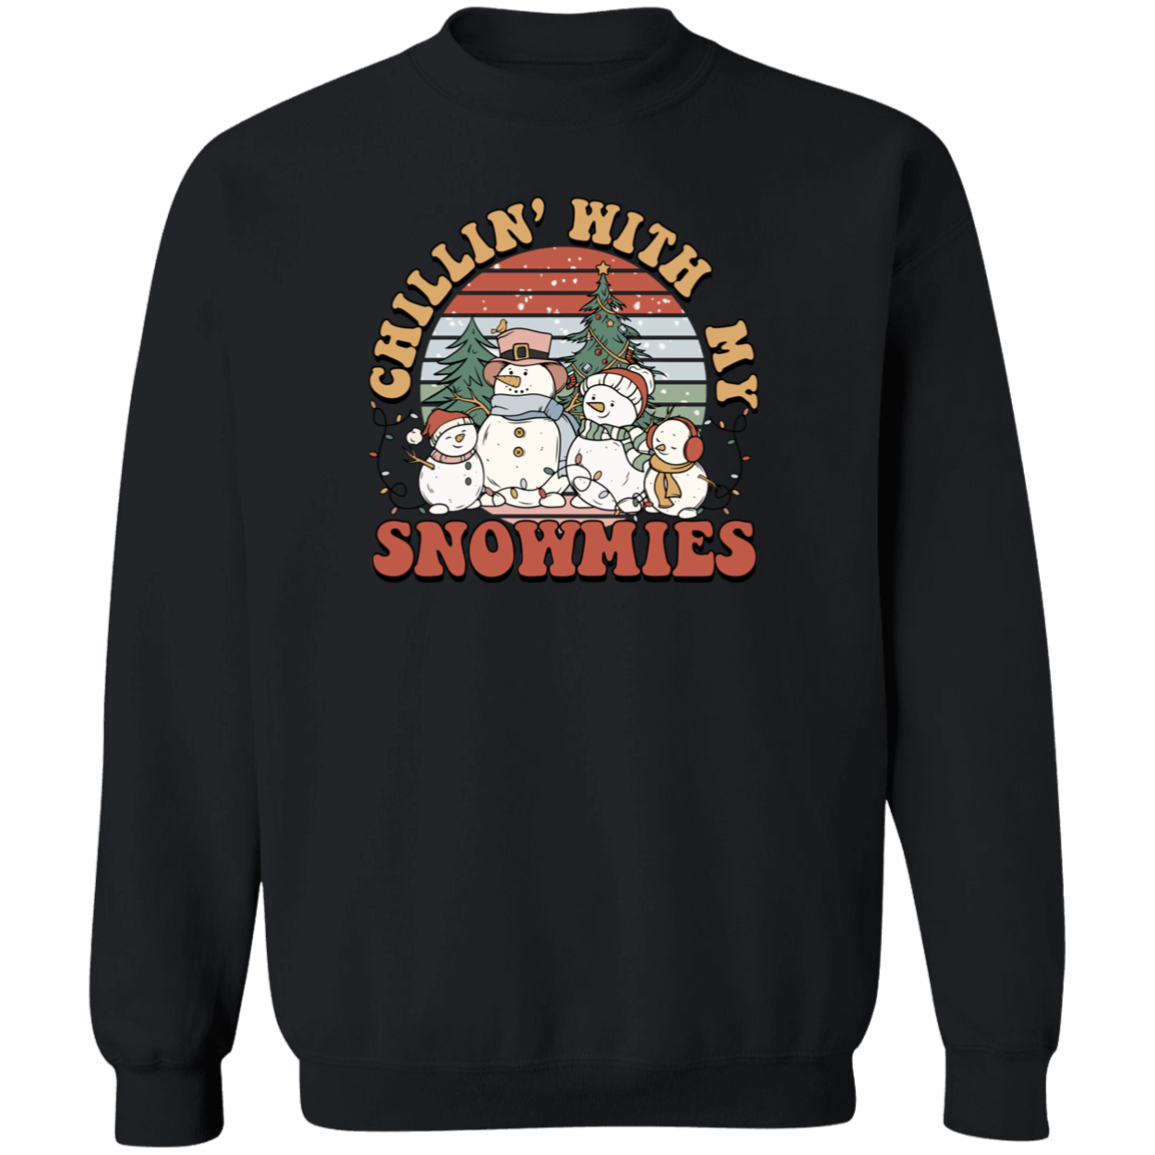 Chillin' With My Snowmies Sweatshirt